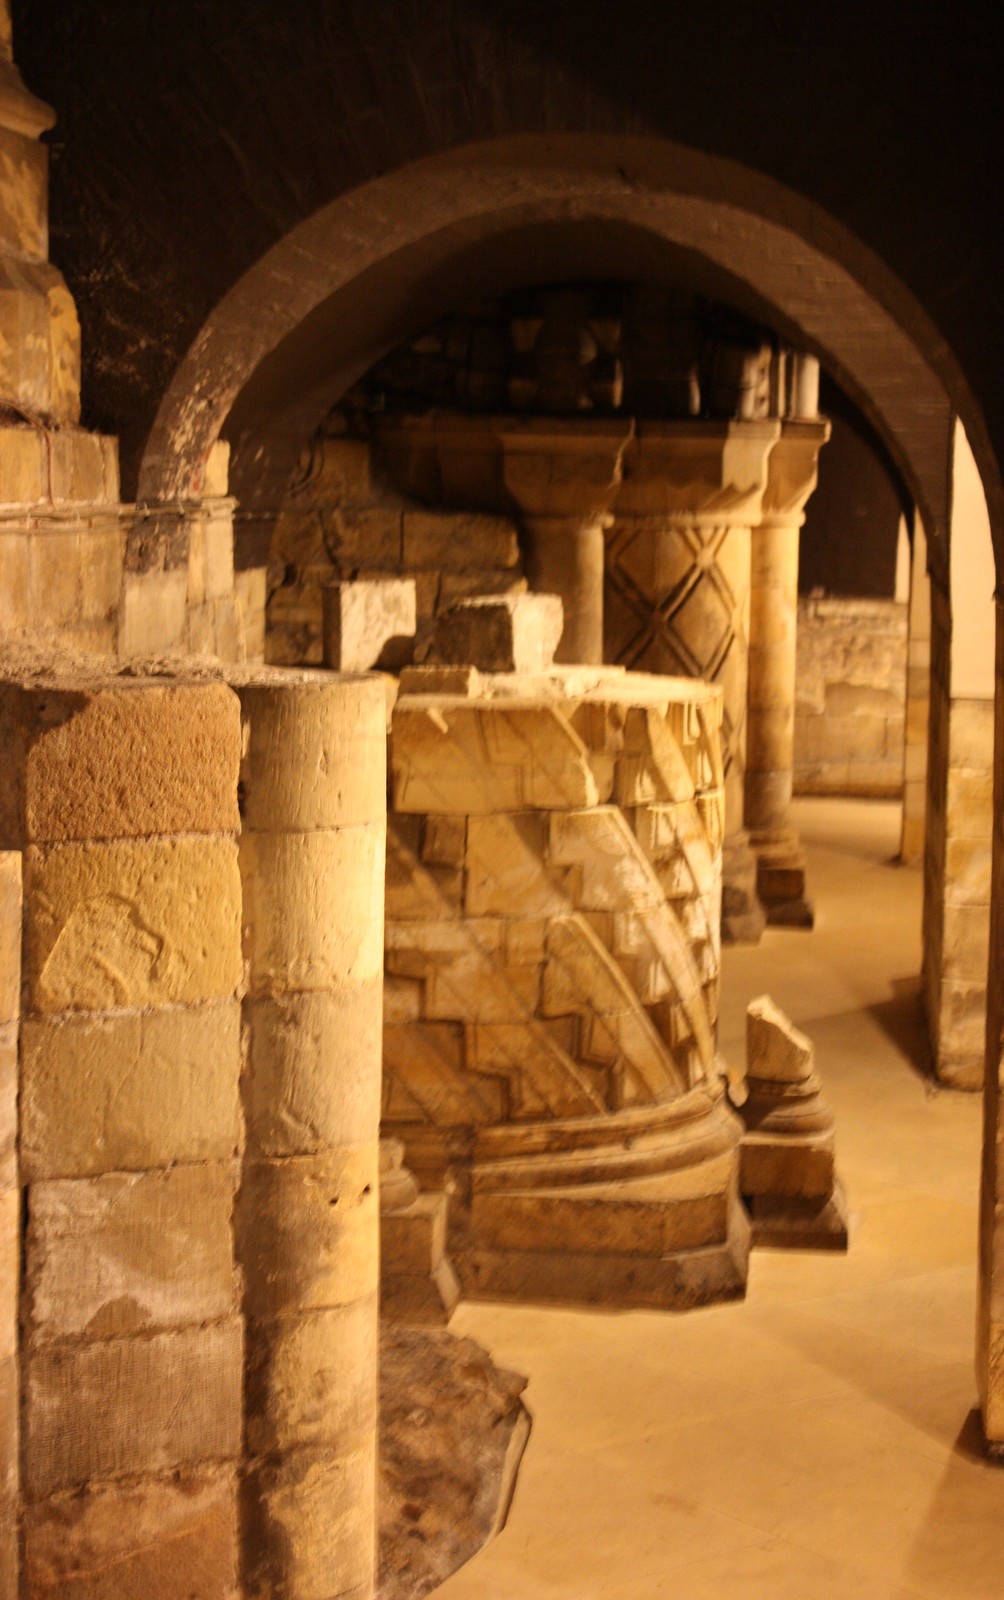 York Minster in the cellar